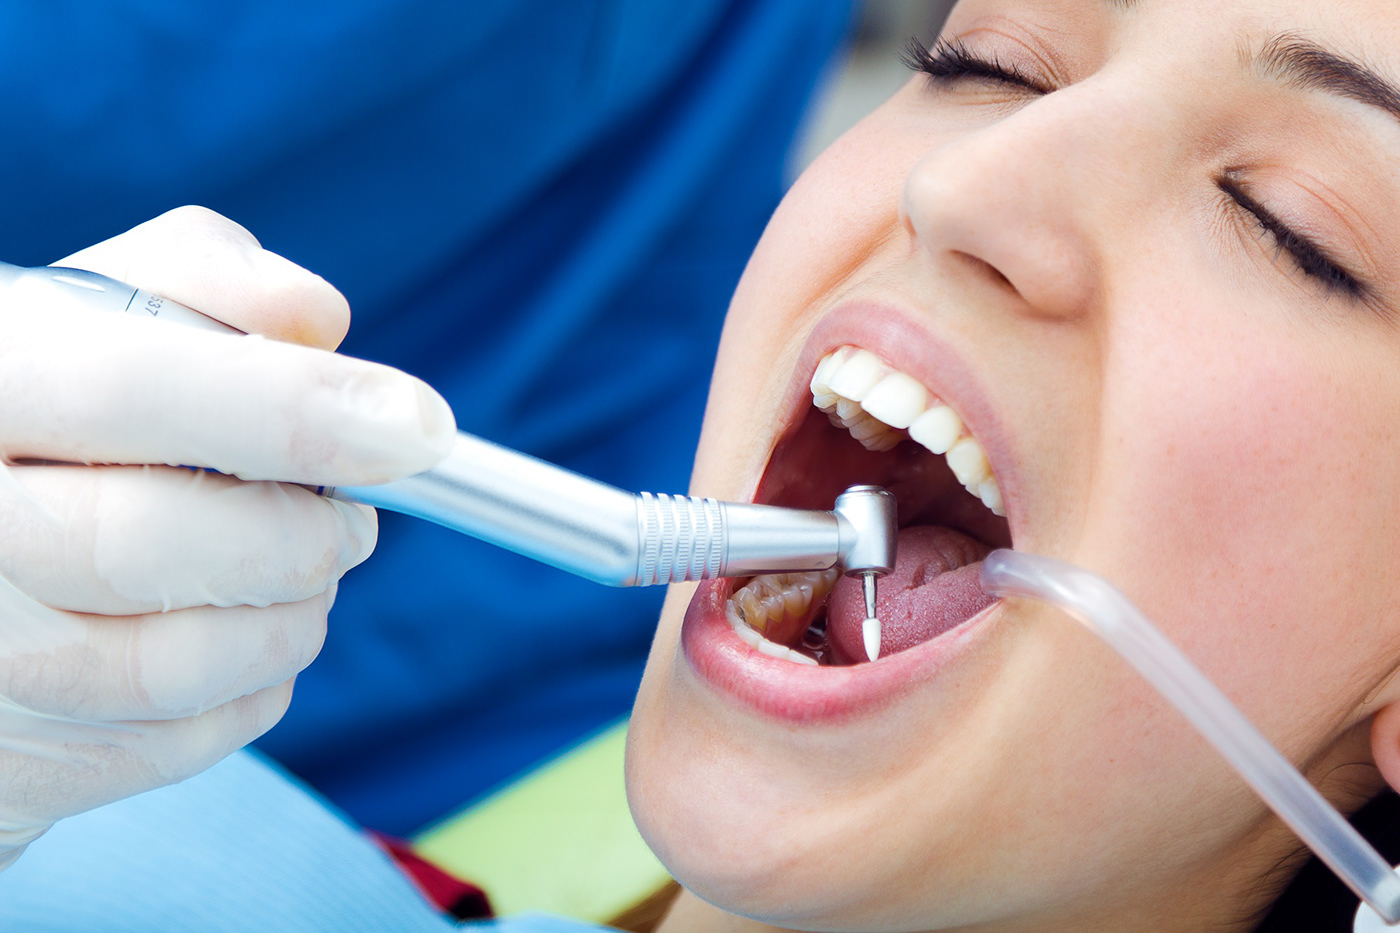 dentist doctor medical teeth